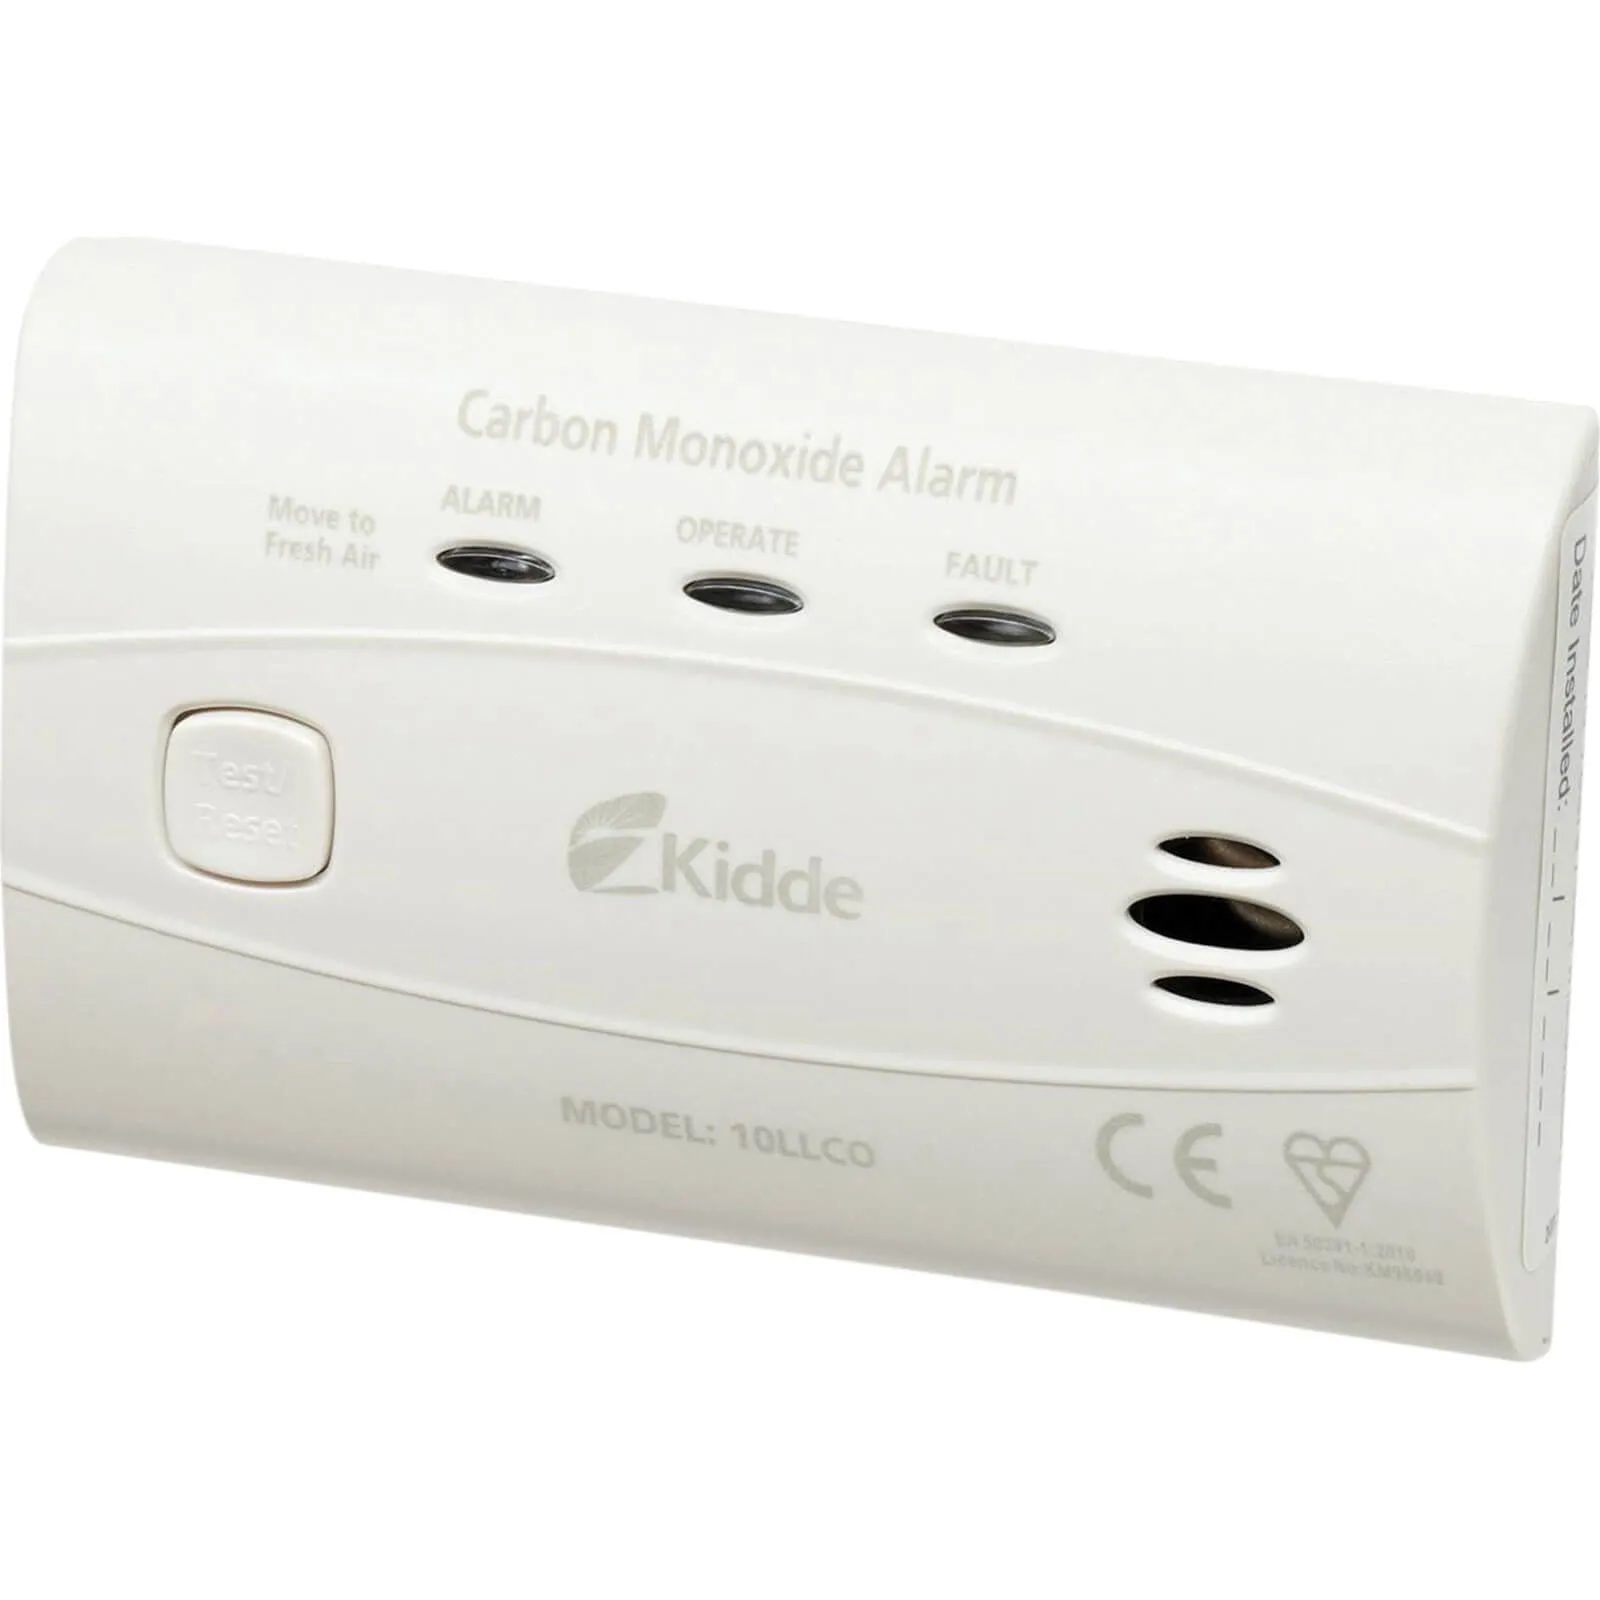 Kidde 10 Year Carbon Monoxide Alarm Sealed Battery